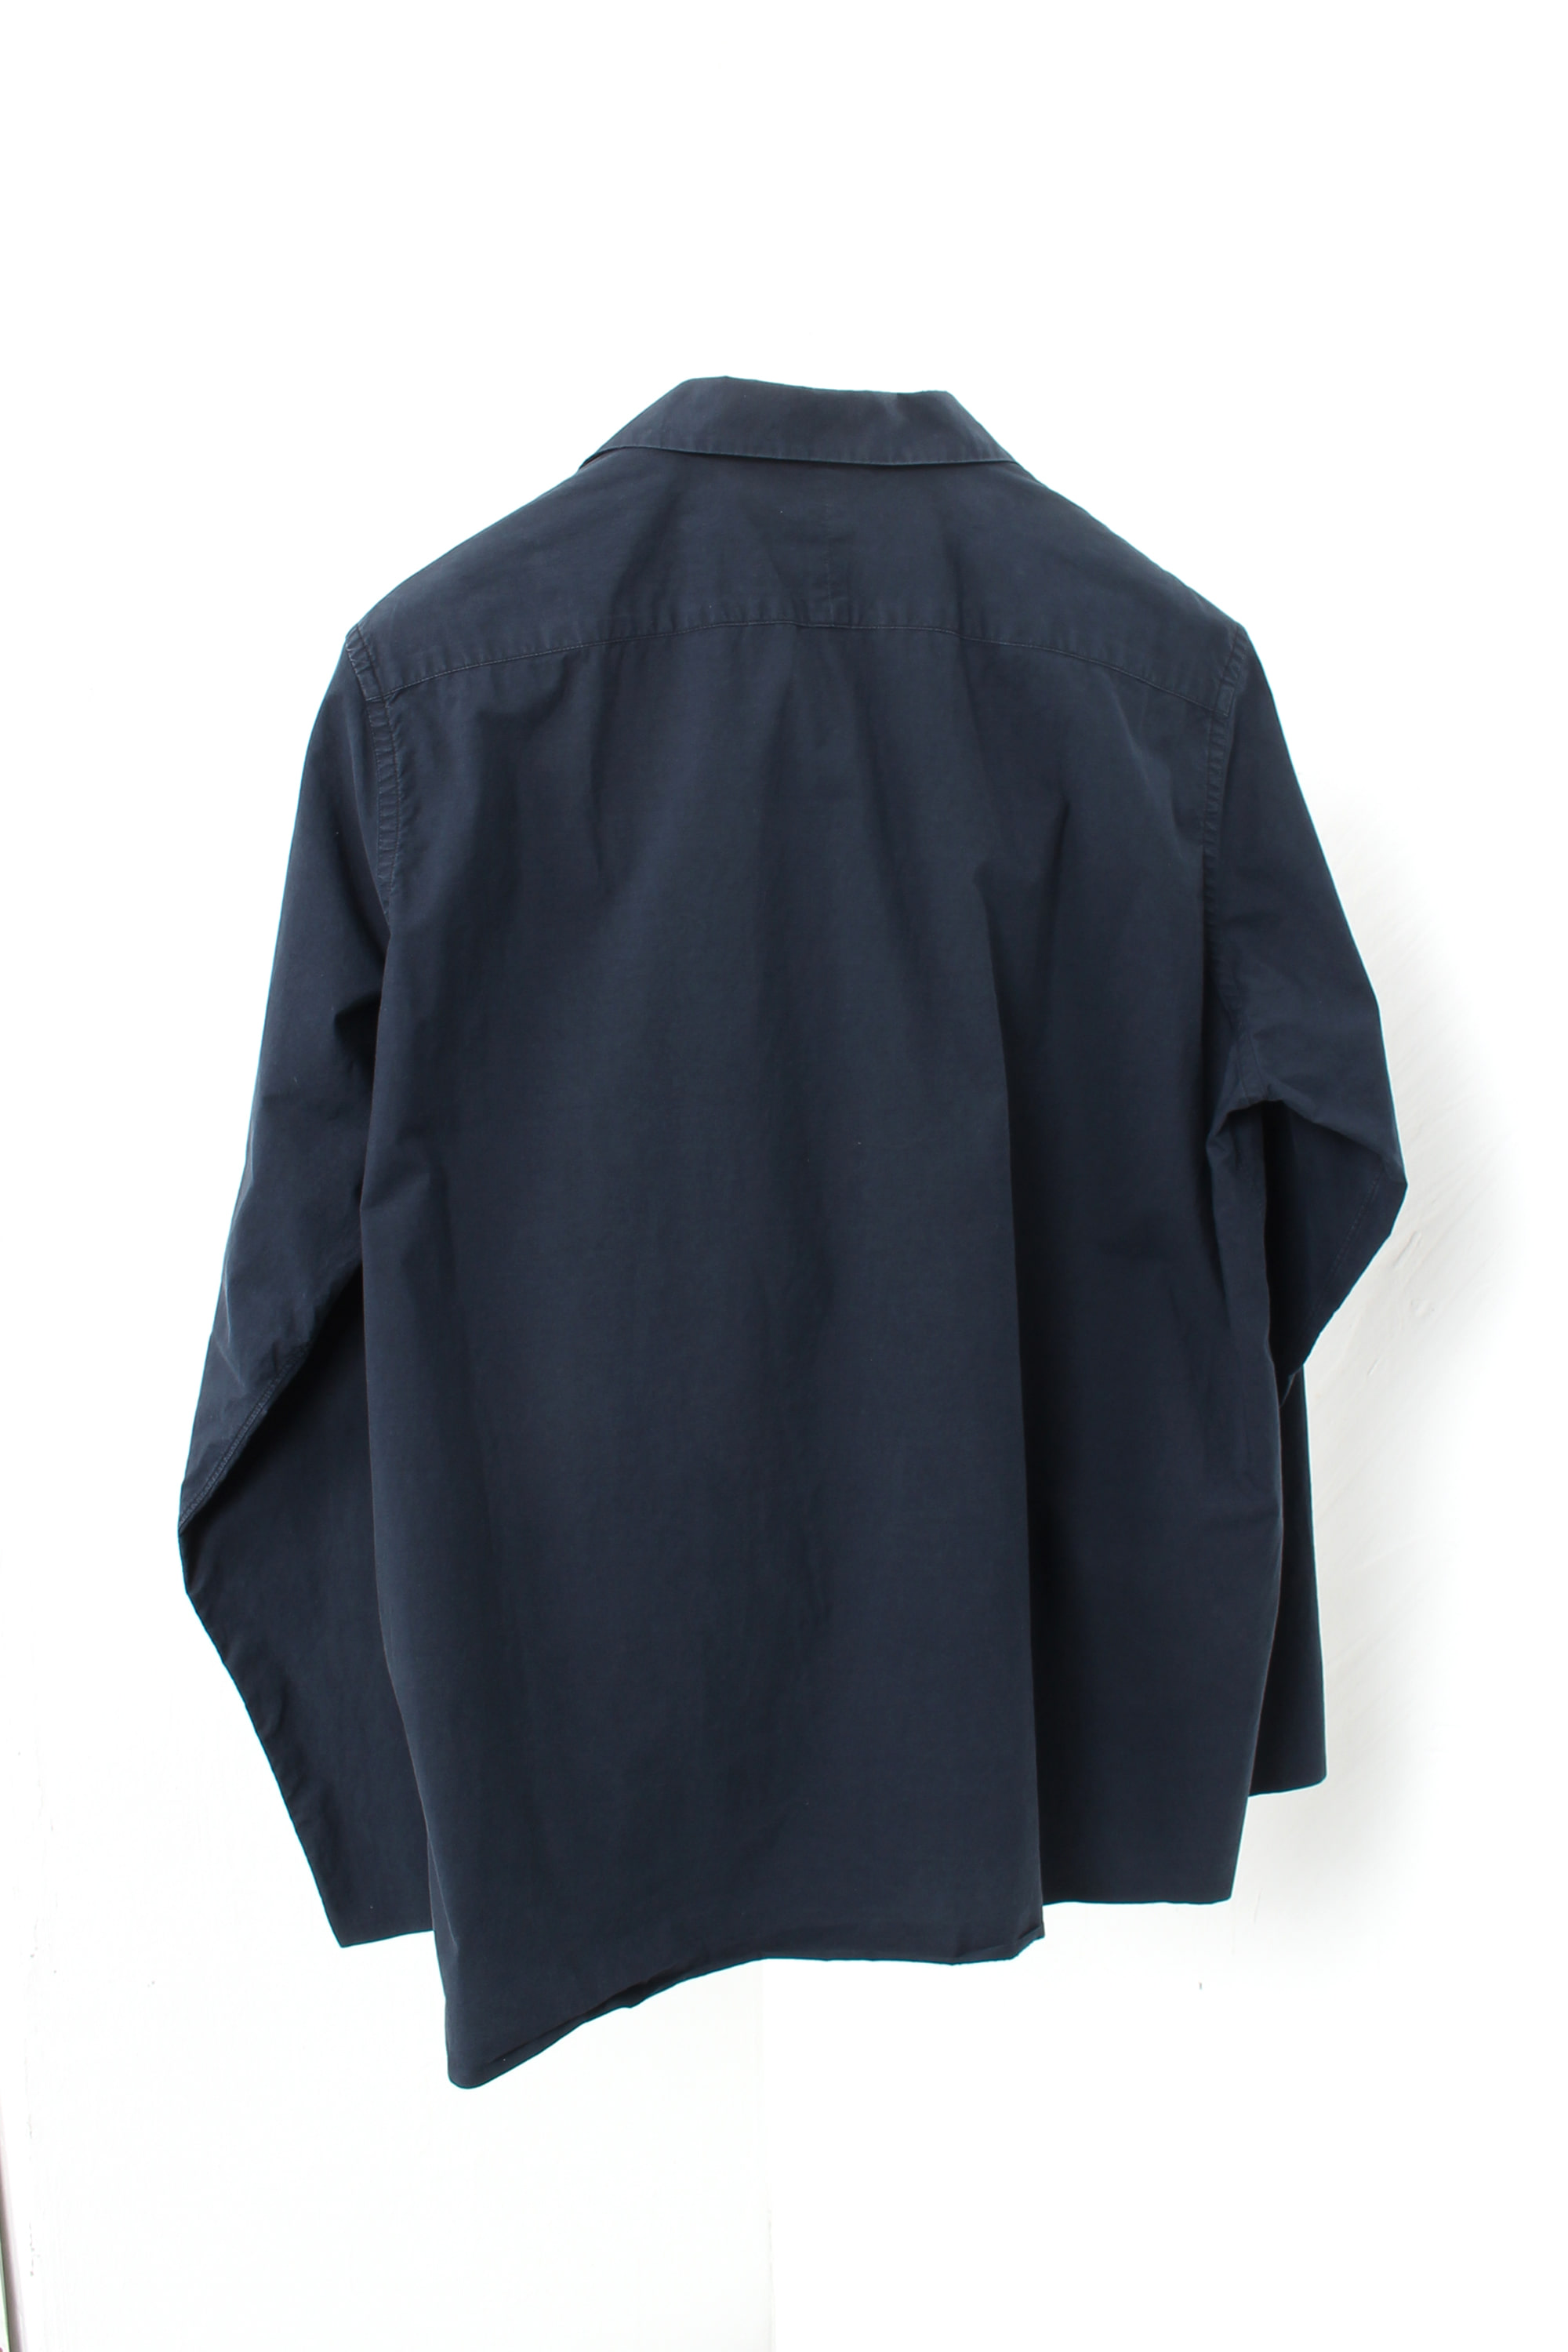 AURALEE Weather Cloth Open Collar Shirts(5)